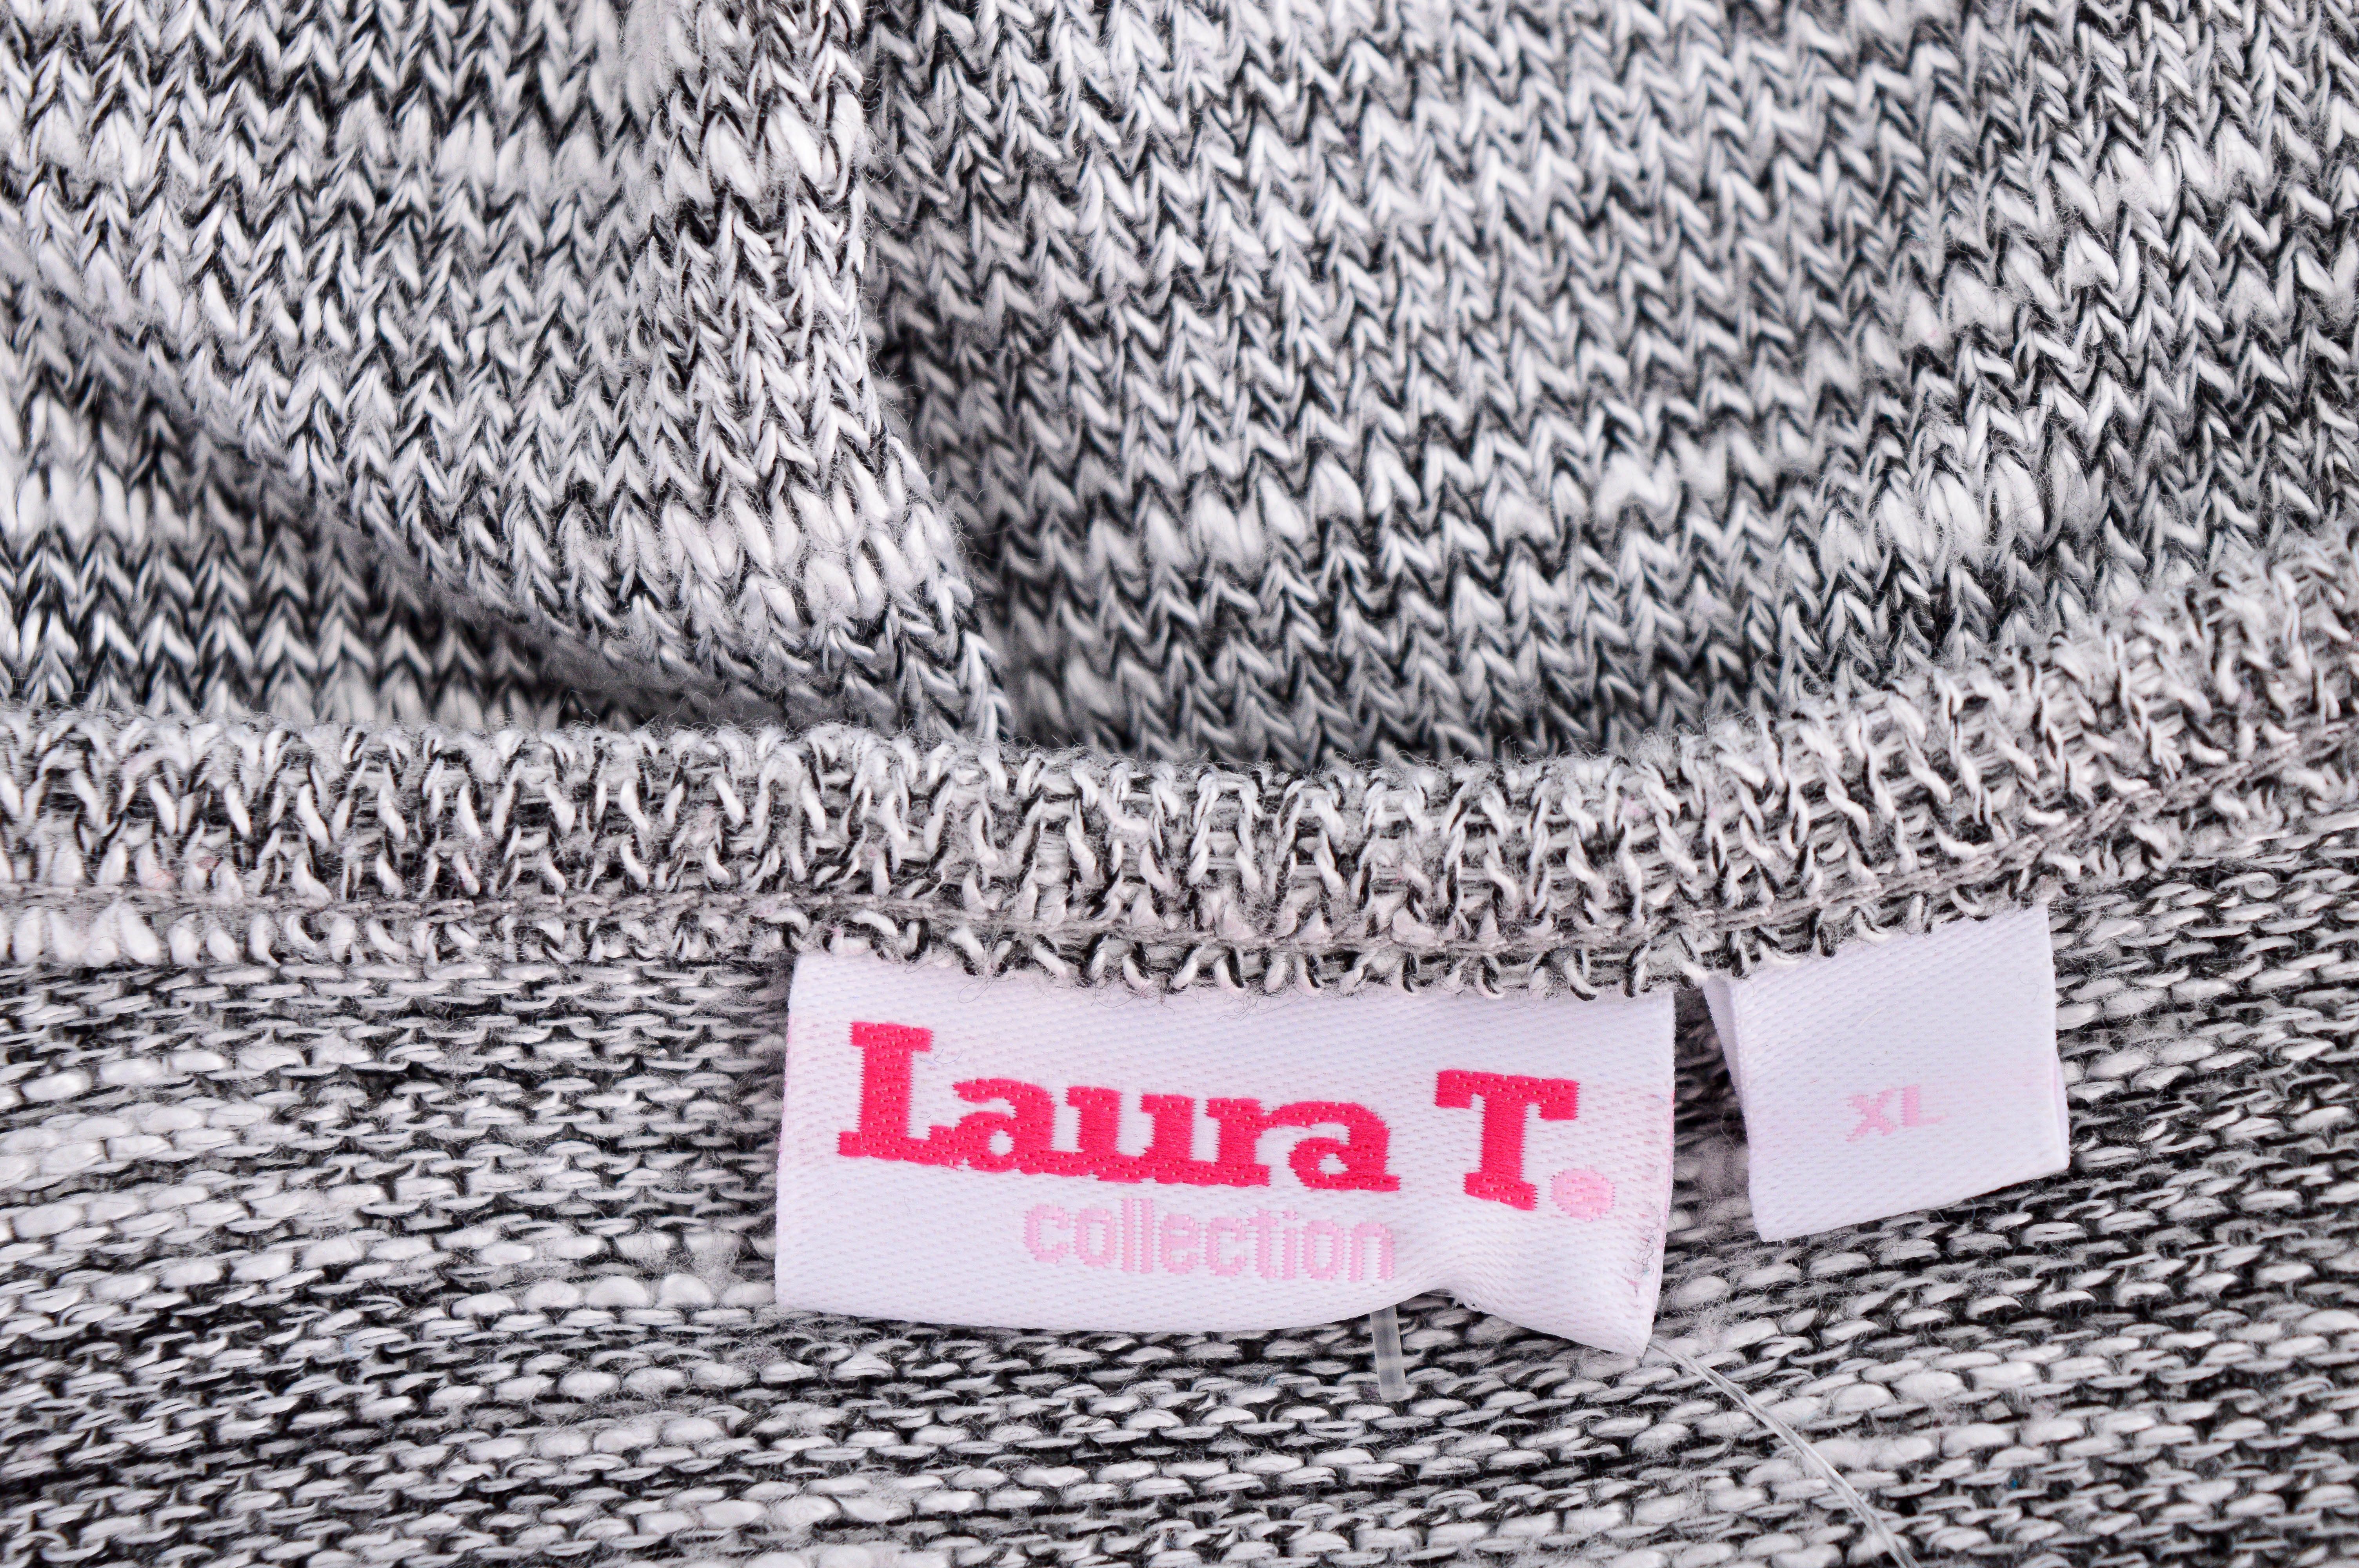 Women's sweater - Laura T. - 2